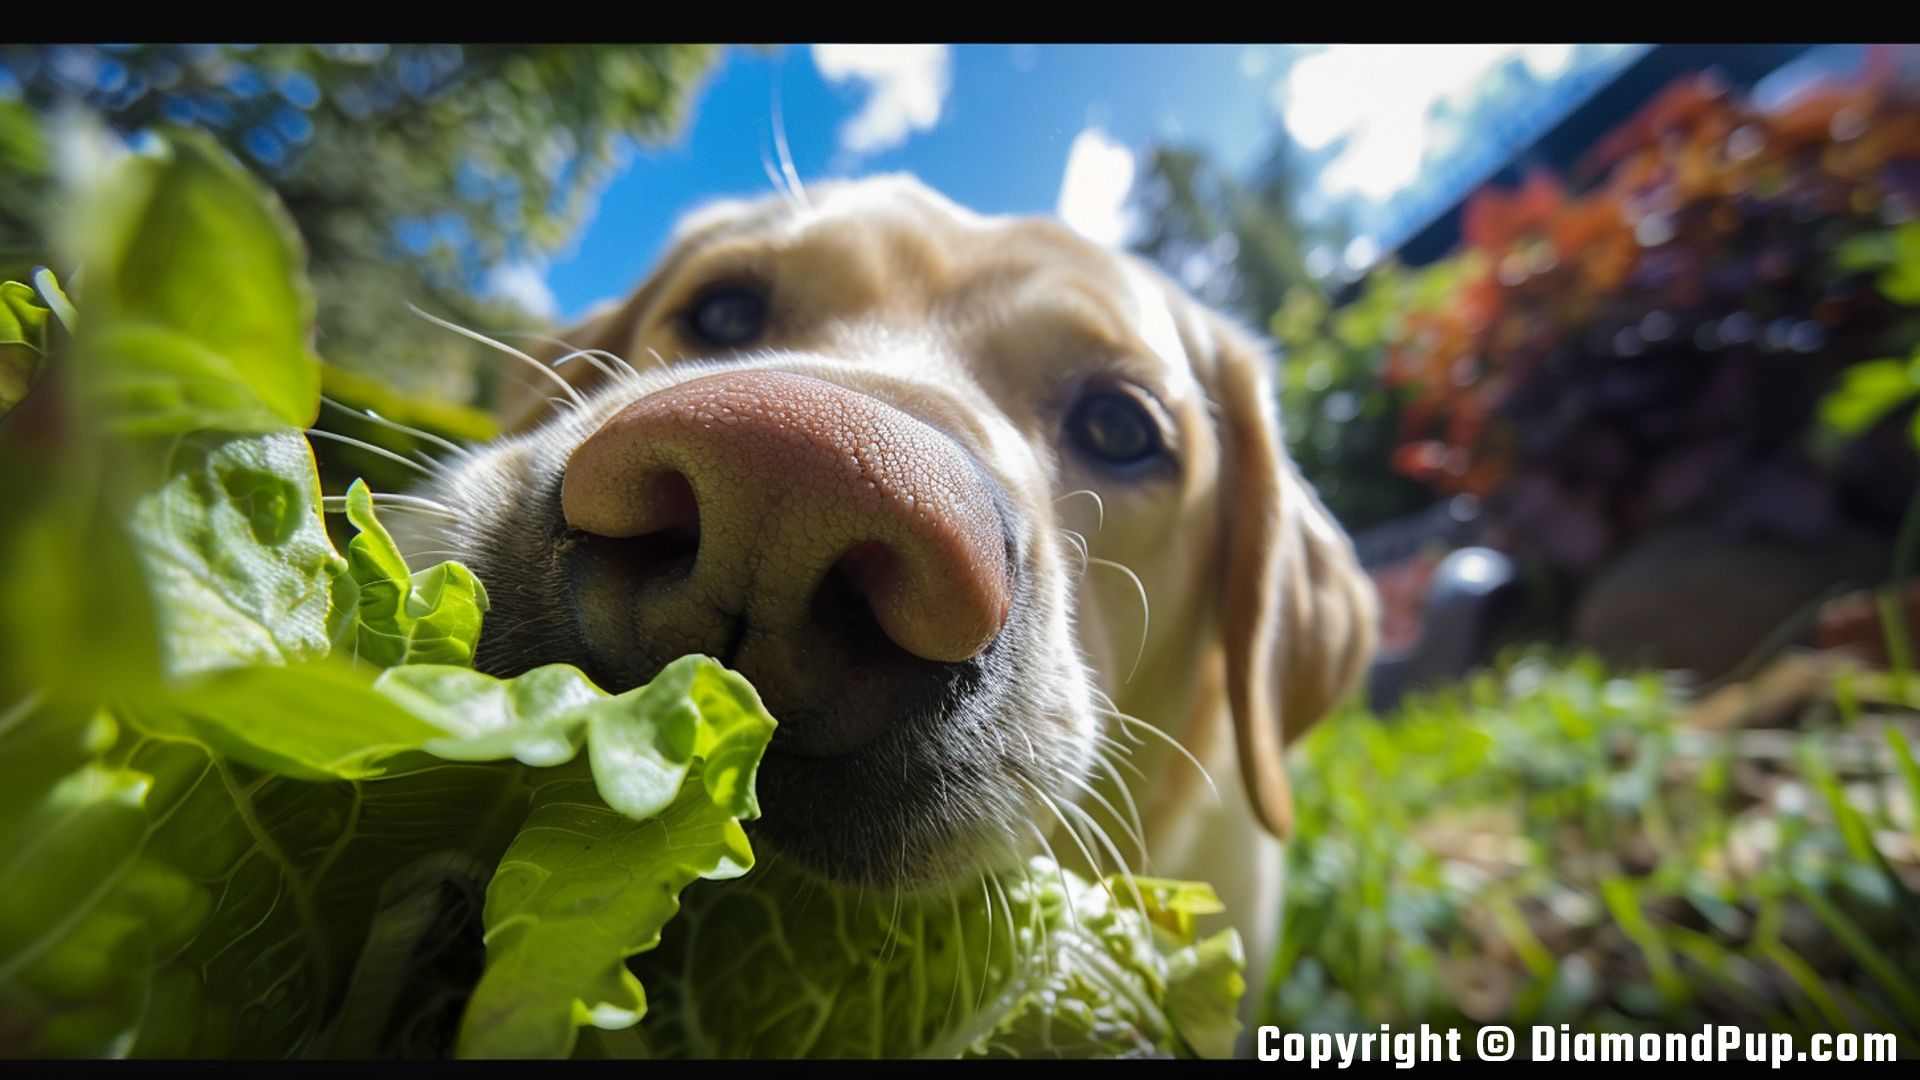 Photo of a Cute Labrador Eating Lettuce